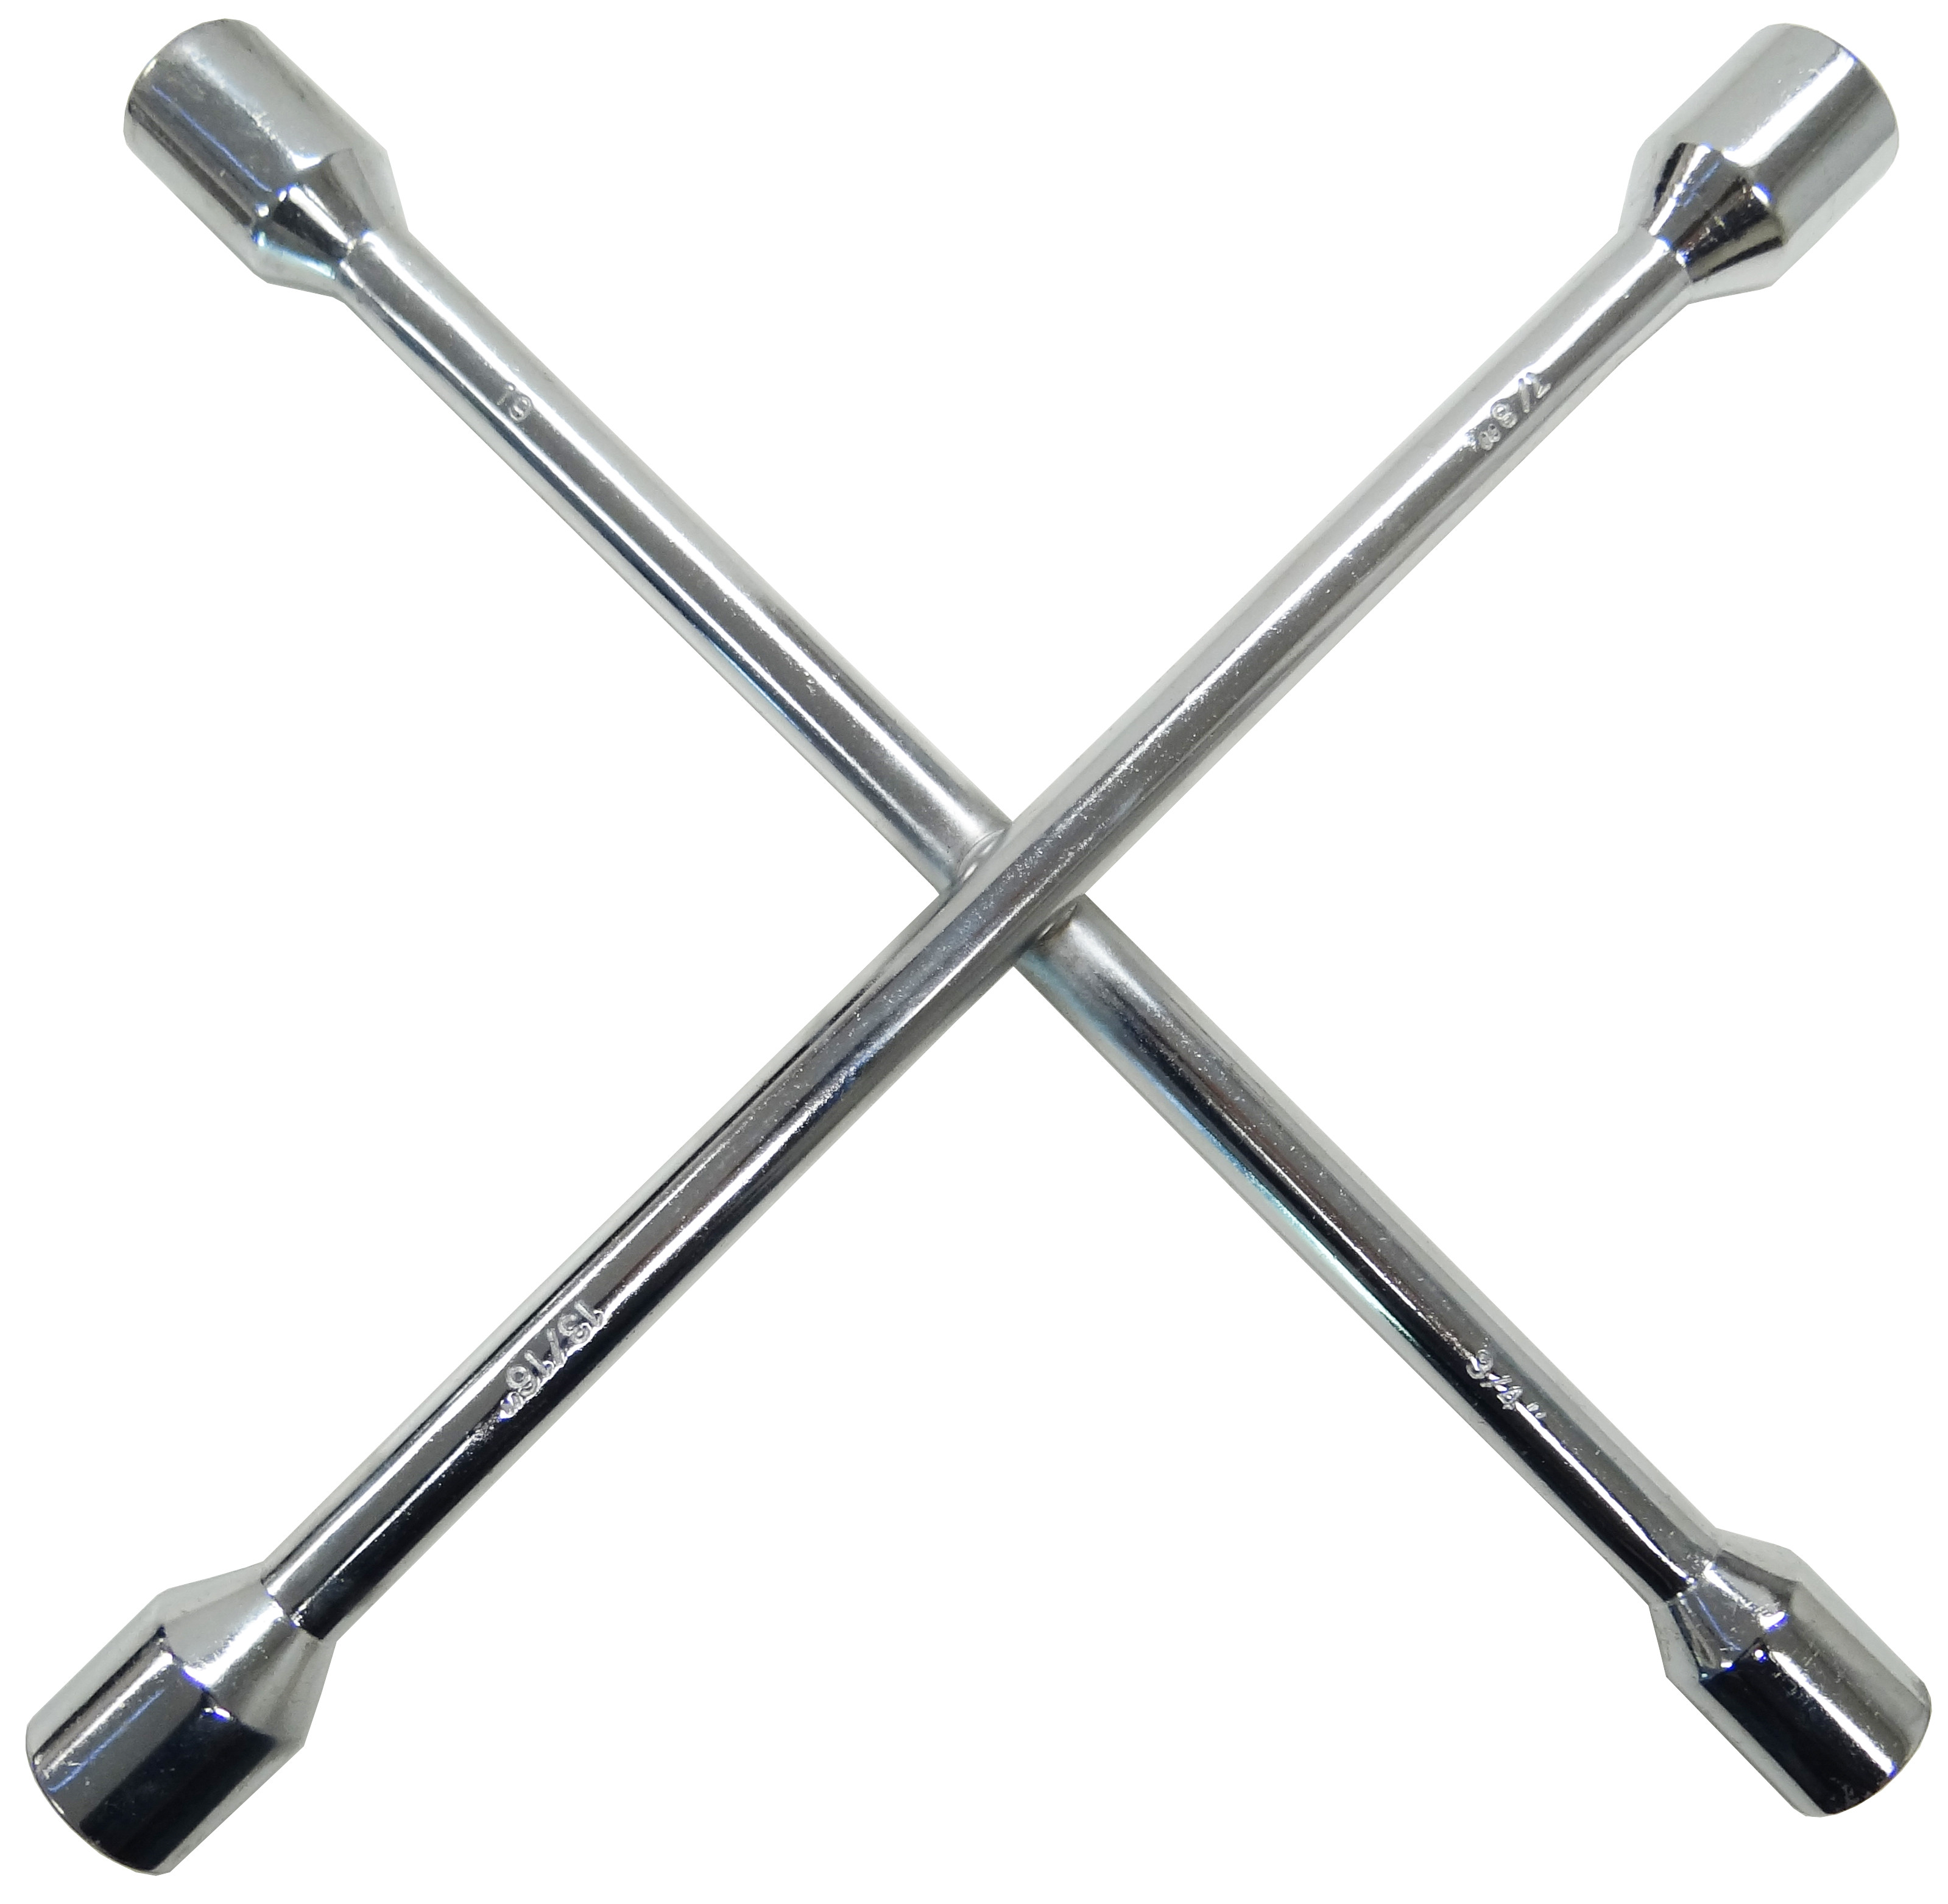 Lug Wrench 4-way 14" Cross Wrench - Chrome - Fits Lug Nuts 11/16" - 3/4" - 13/16" - 7/8" Metric 17 mm - 19 mm - 21 mm